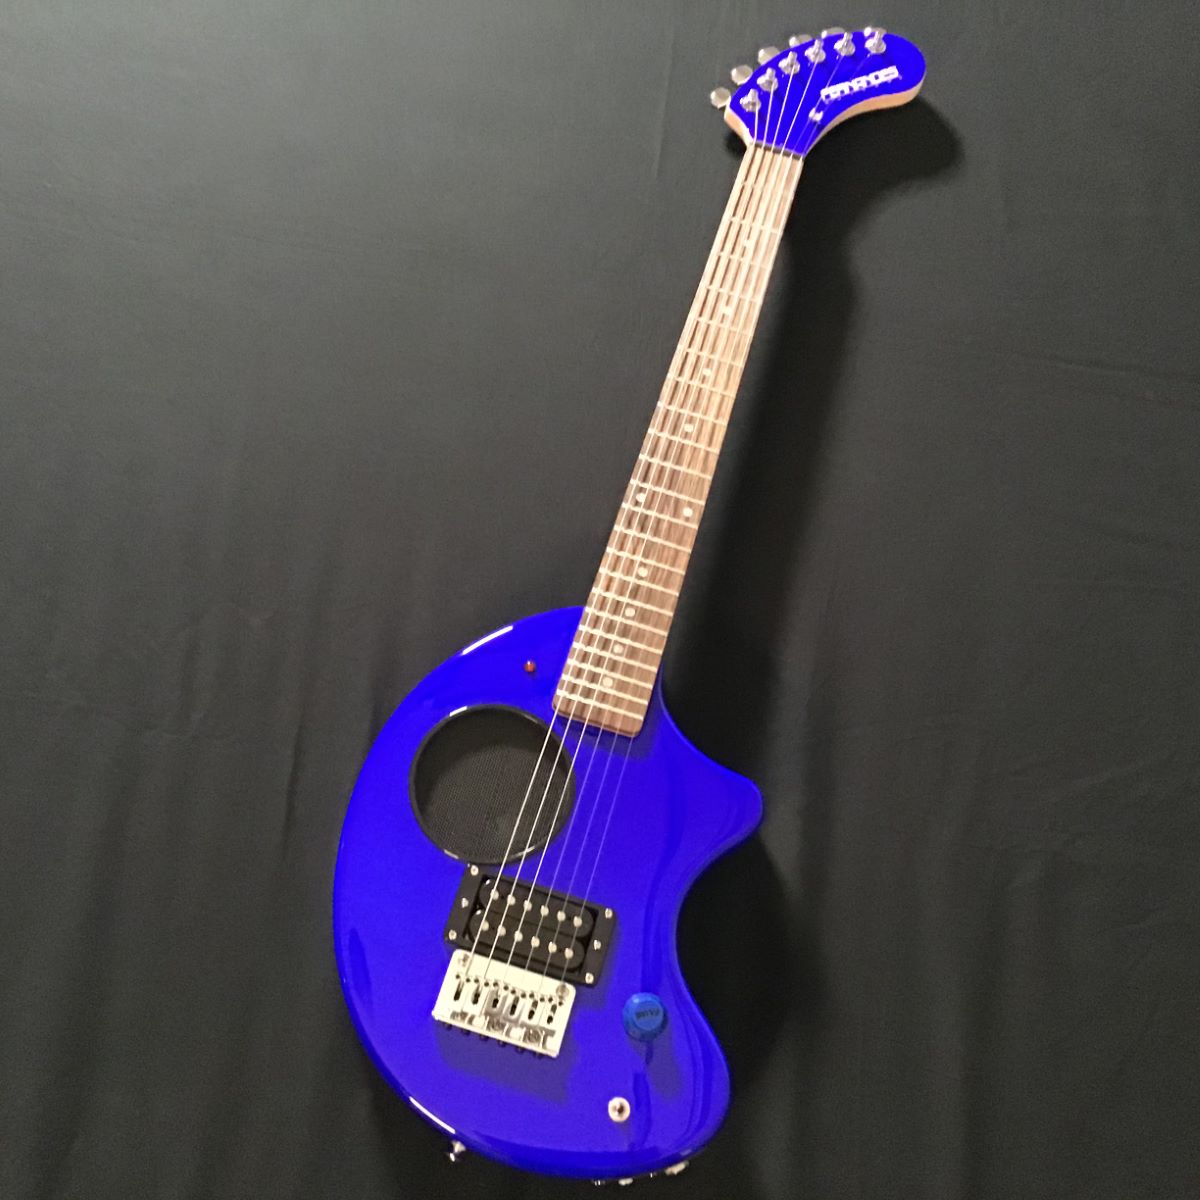 FERNANDES ZO-3 BLUE スピーカー内蔵ミニエレキギター ブルー ソフト ...